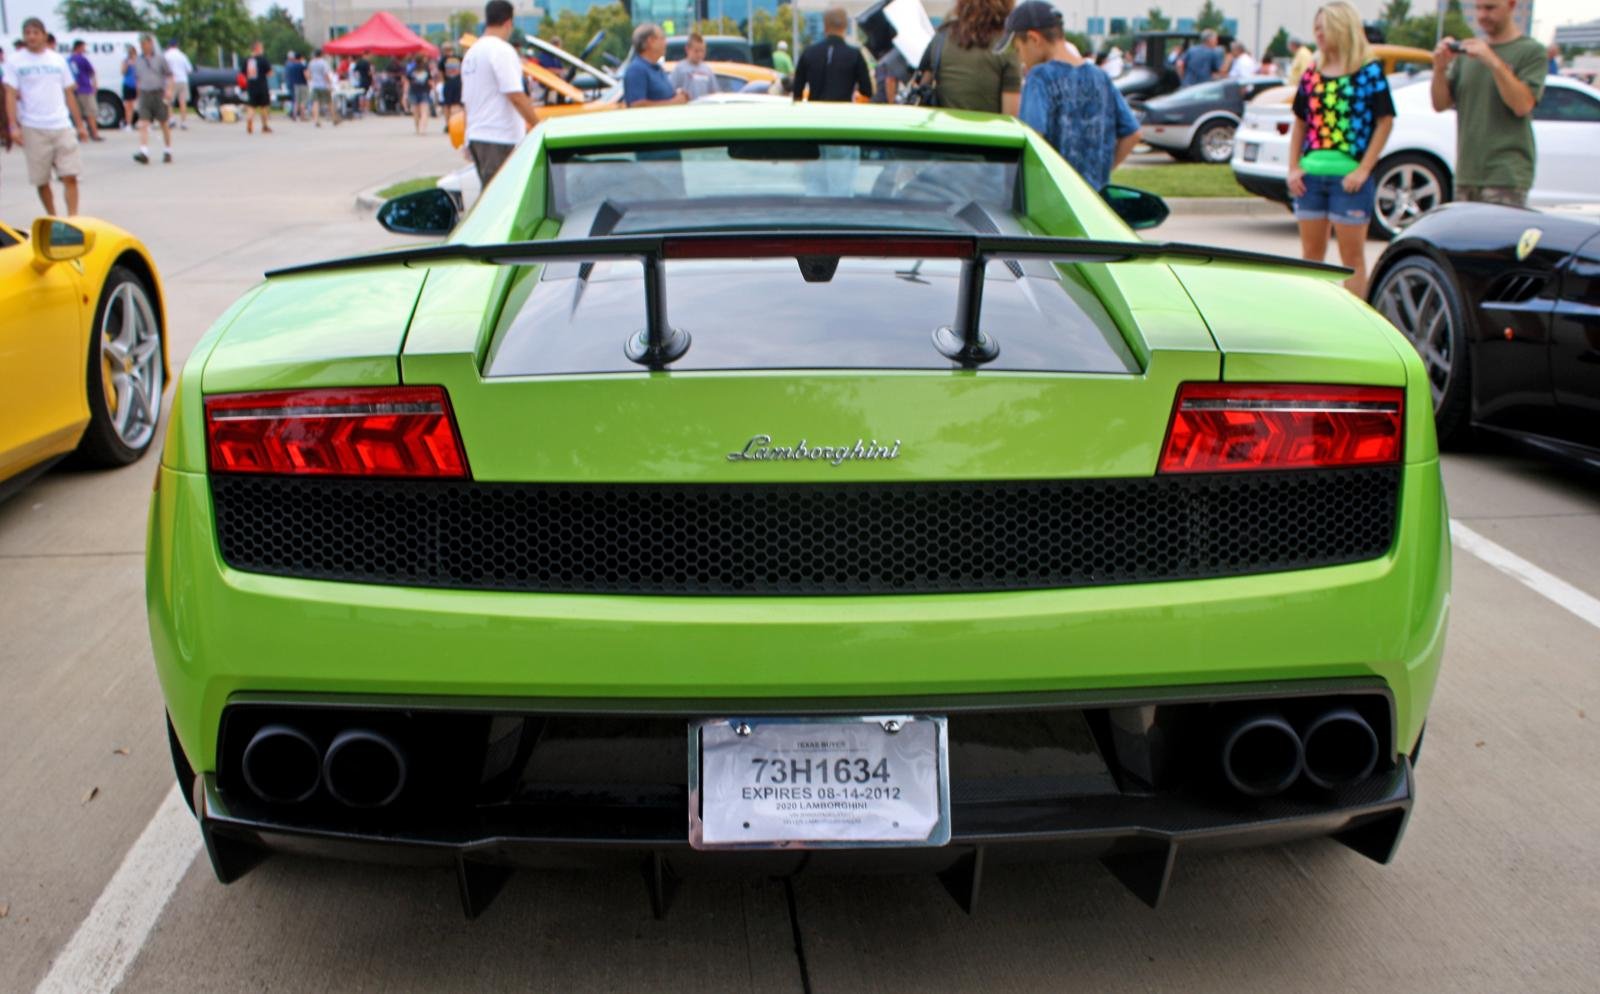 lp550, Verde, Green, Vert, Coupe, Gallardo, Lamborghini, Supercars Wallpaper